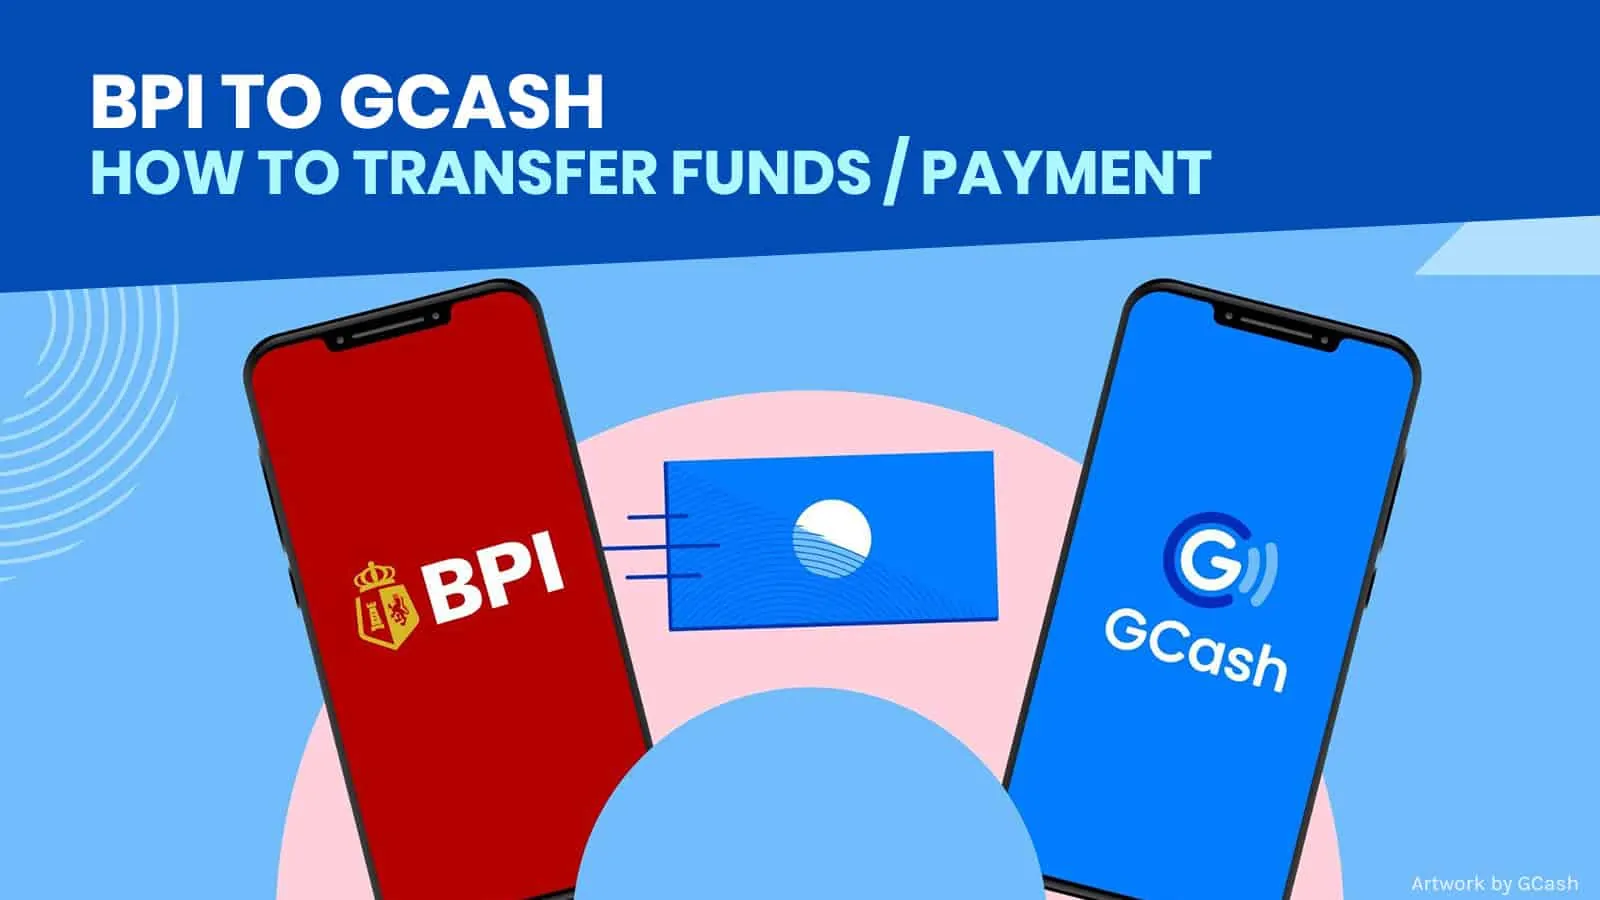 BPI到GCASH：如何通过BPI移动应用程序转移资金（付款和现金）